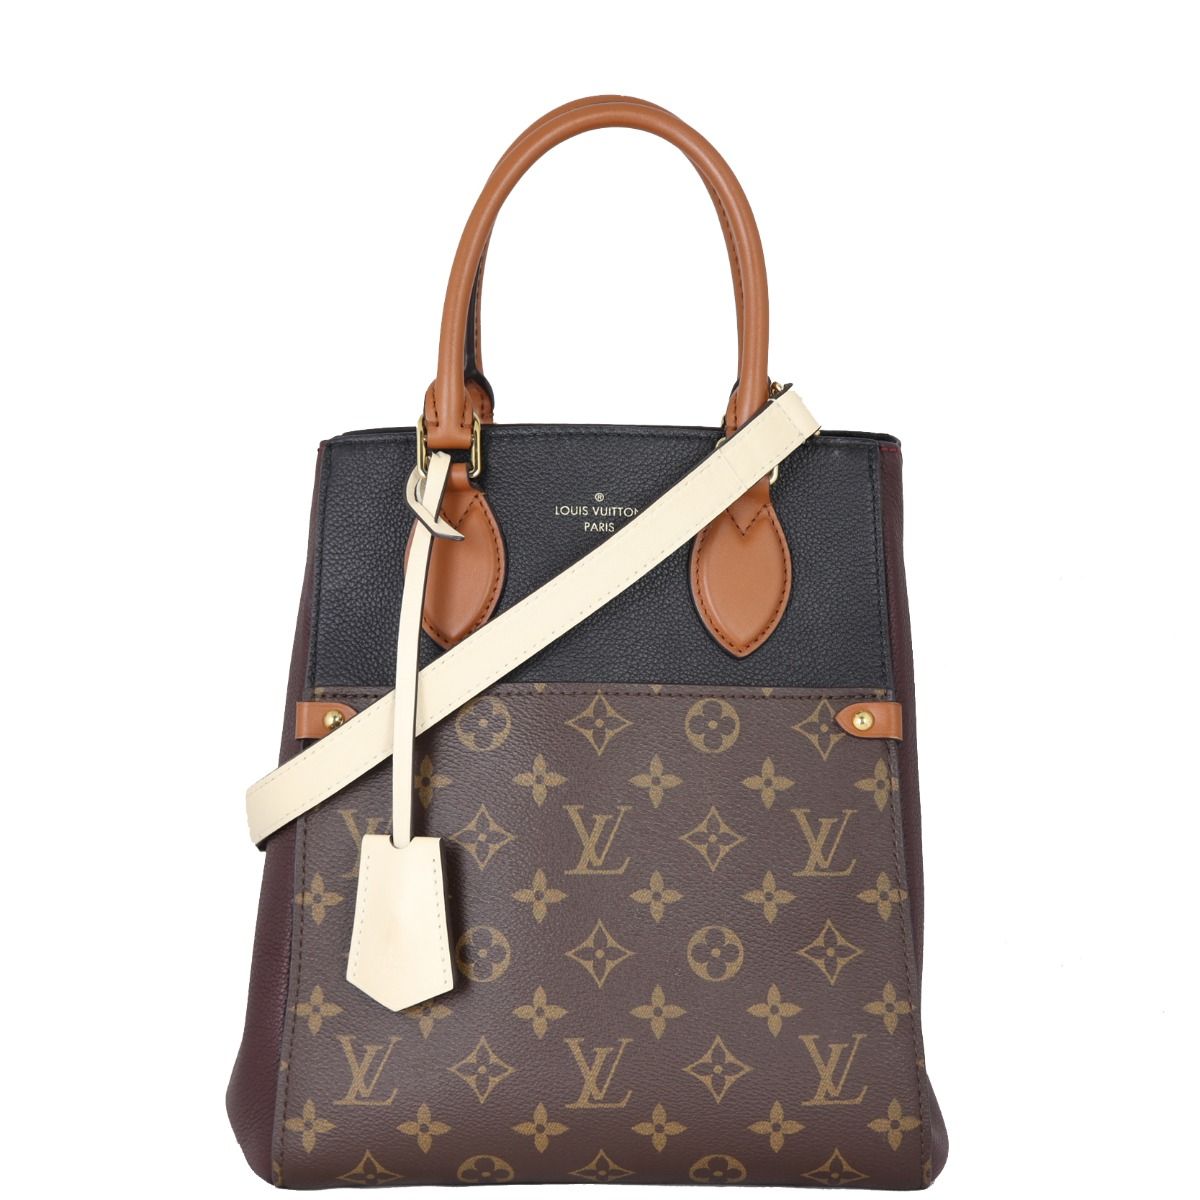 LV fold tote handbag  Christina's Bend the Trend